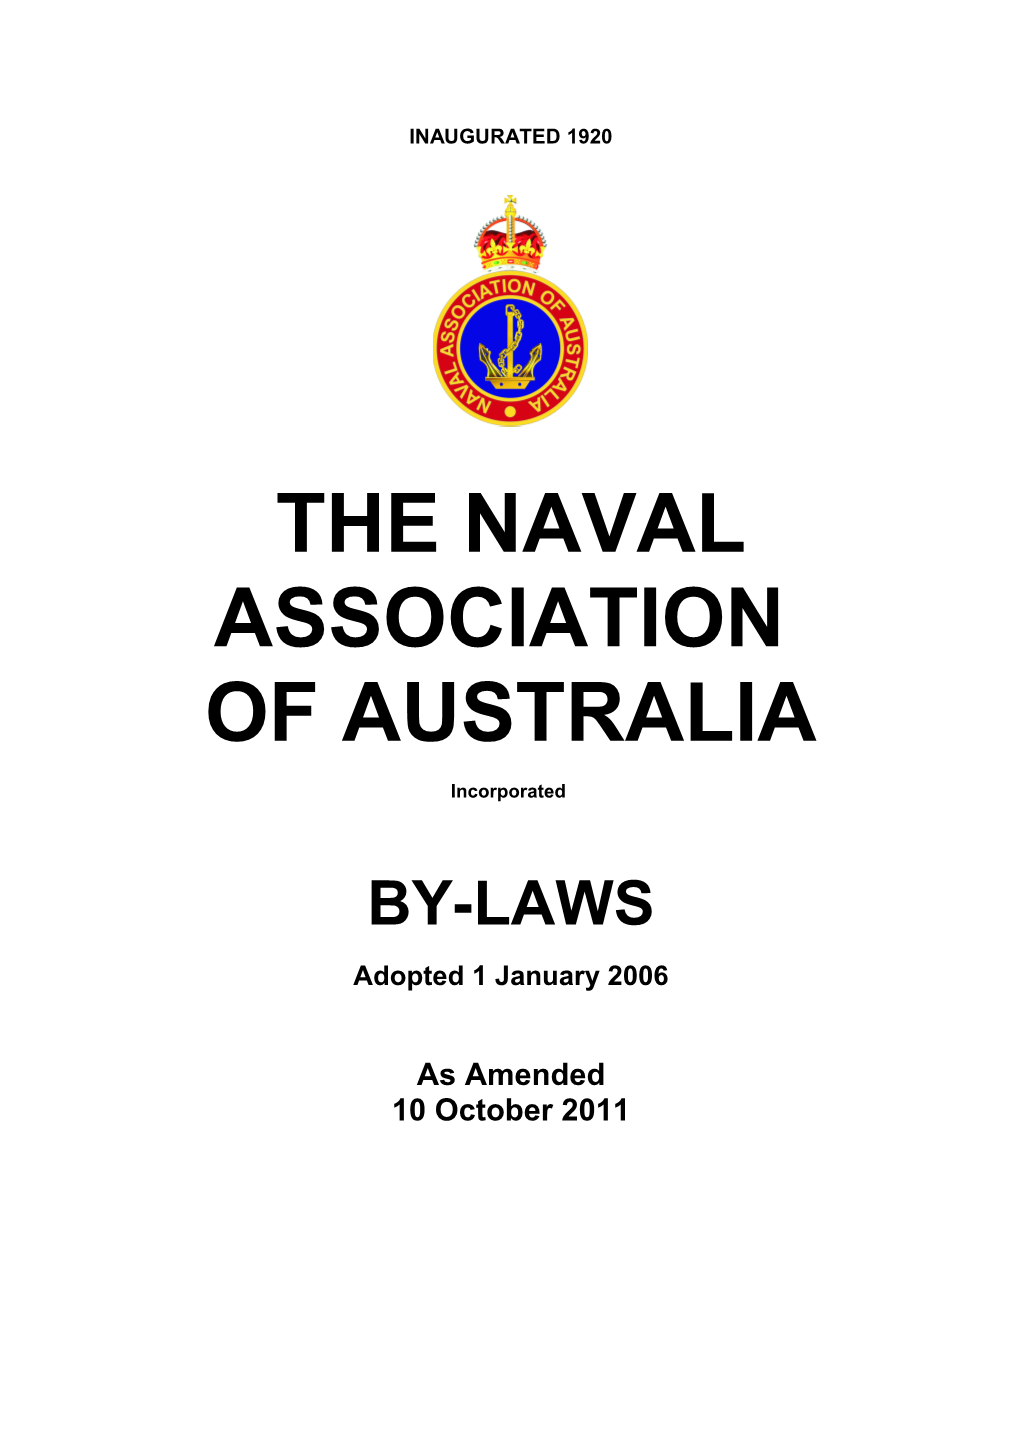 The Naval Association of Australia